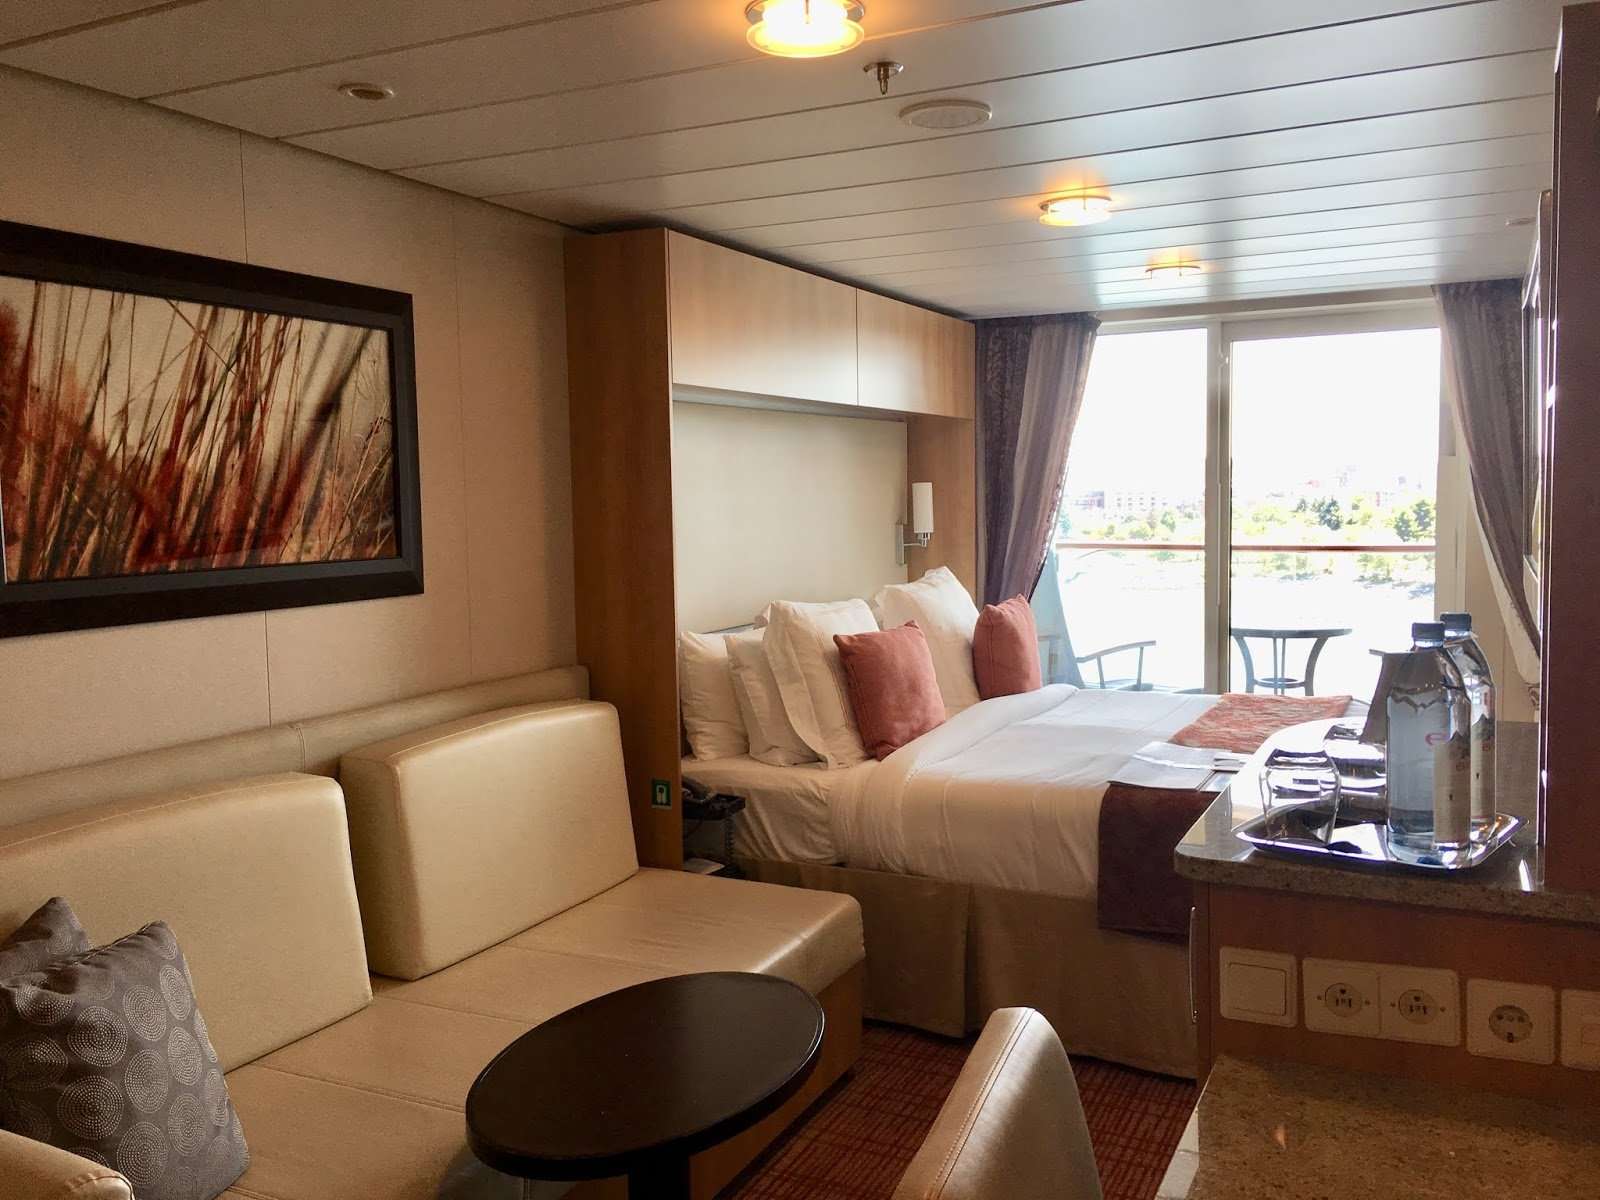 Celebrity Cruises: Is concierge class worth it?